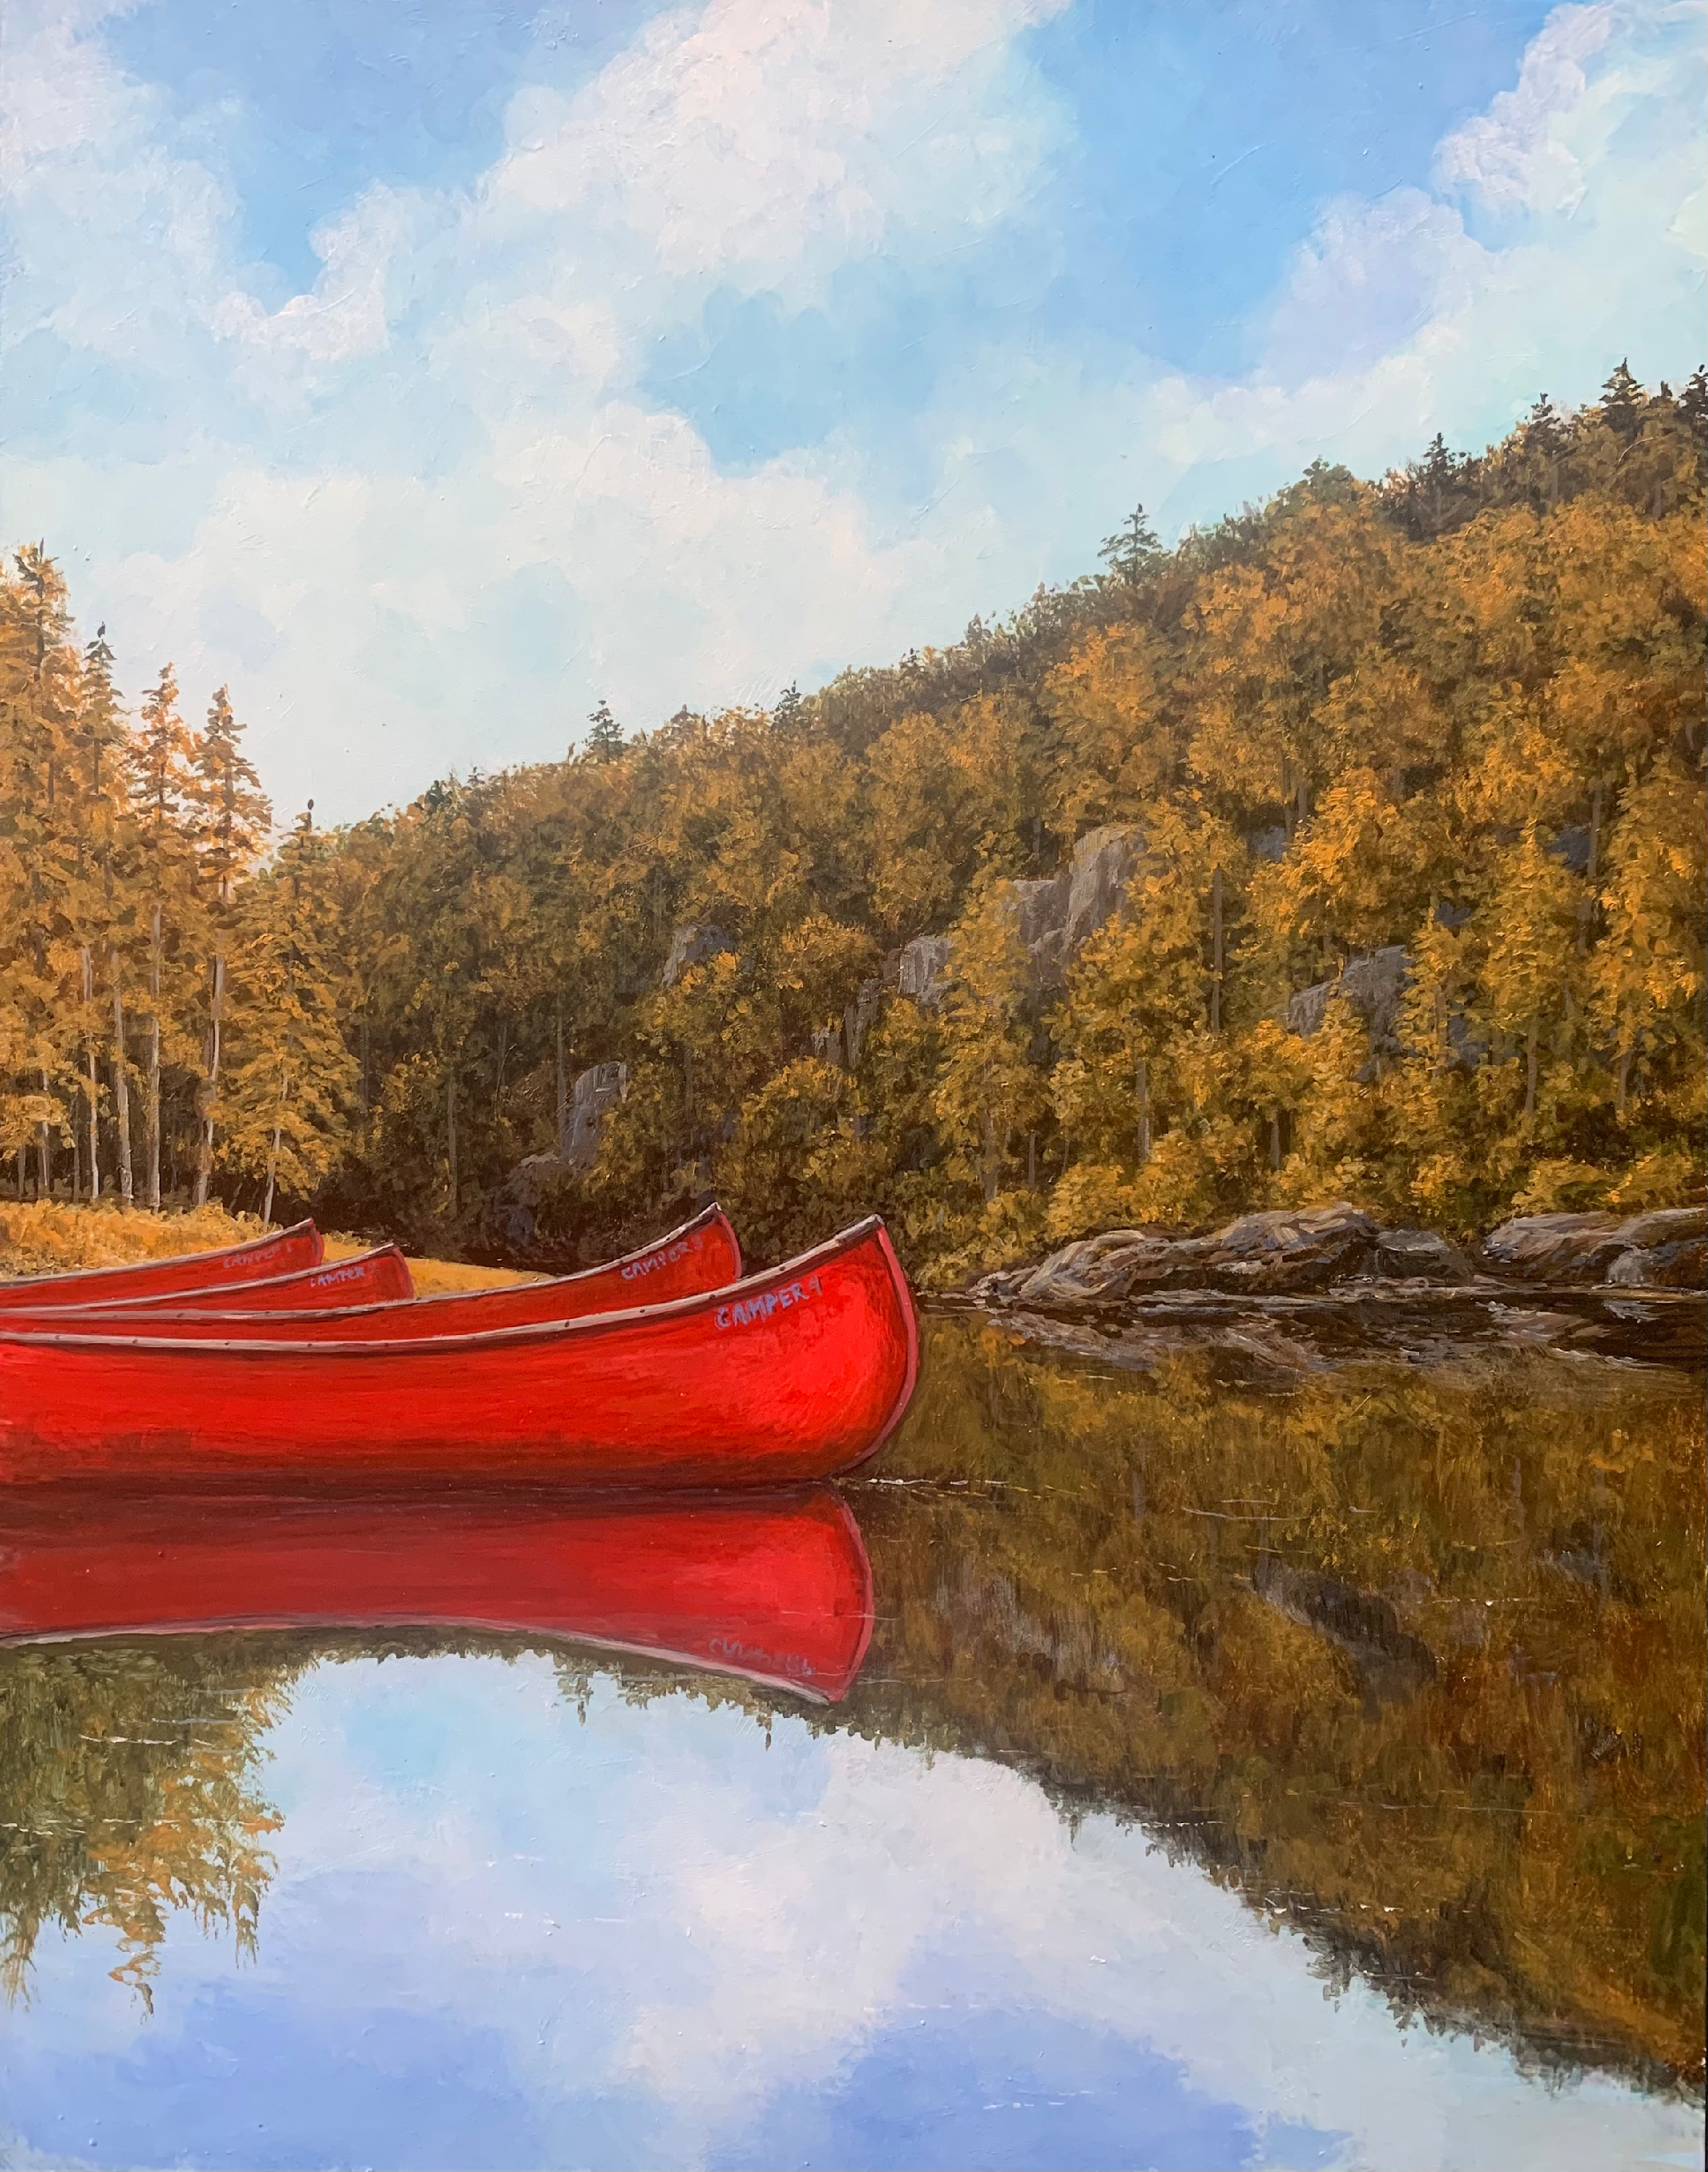 Red canoes uzqtof